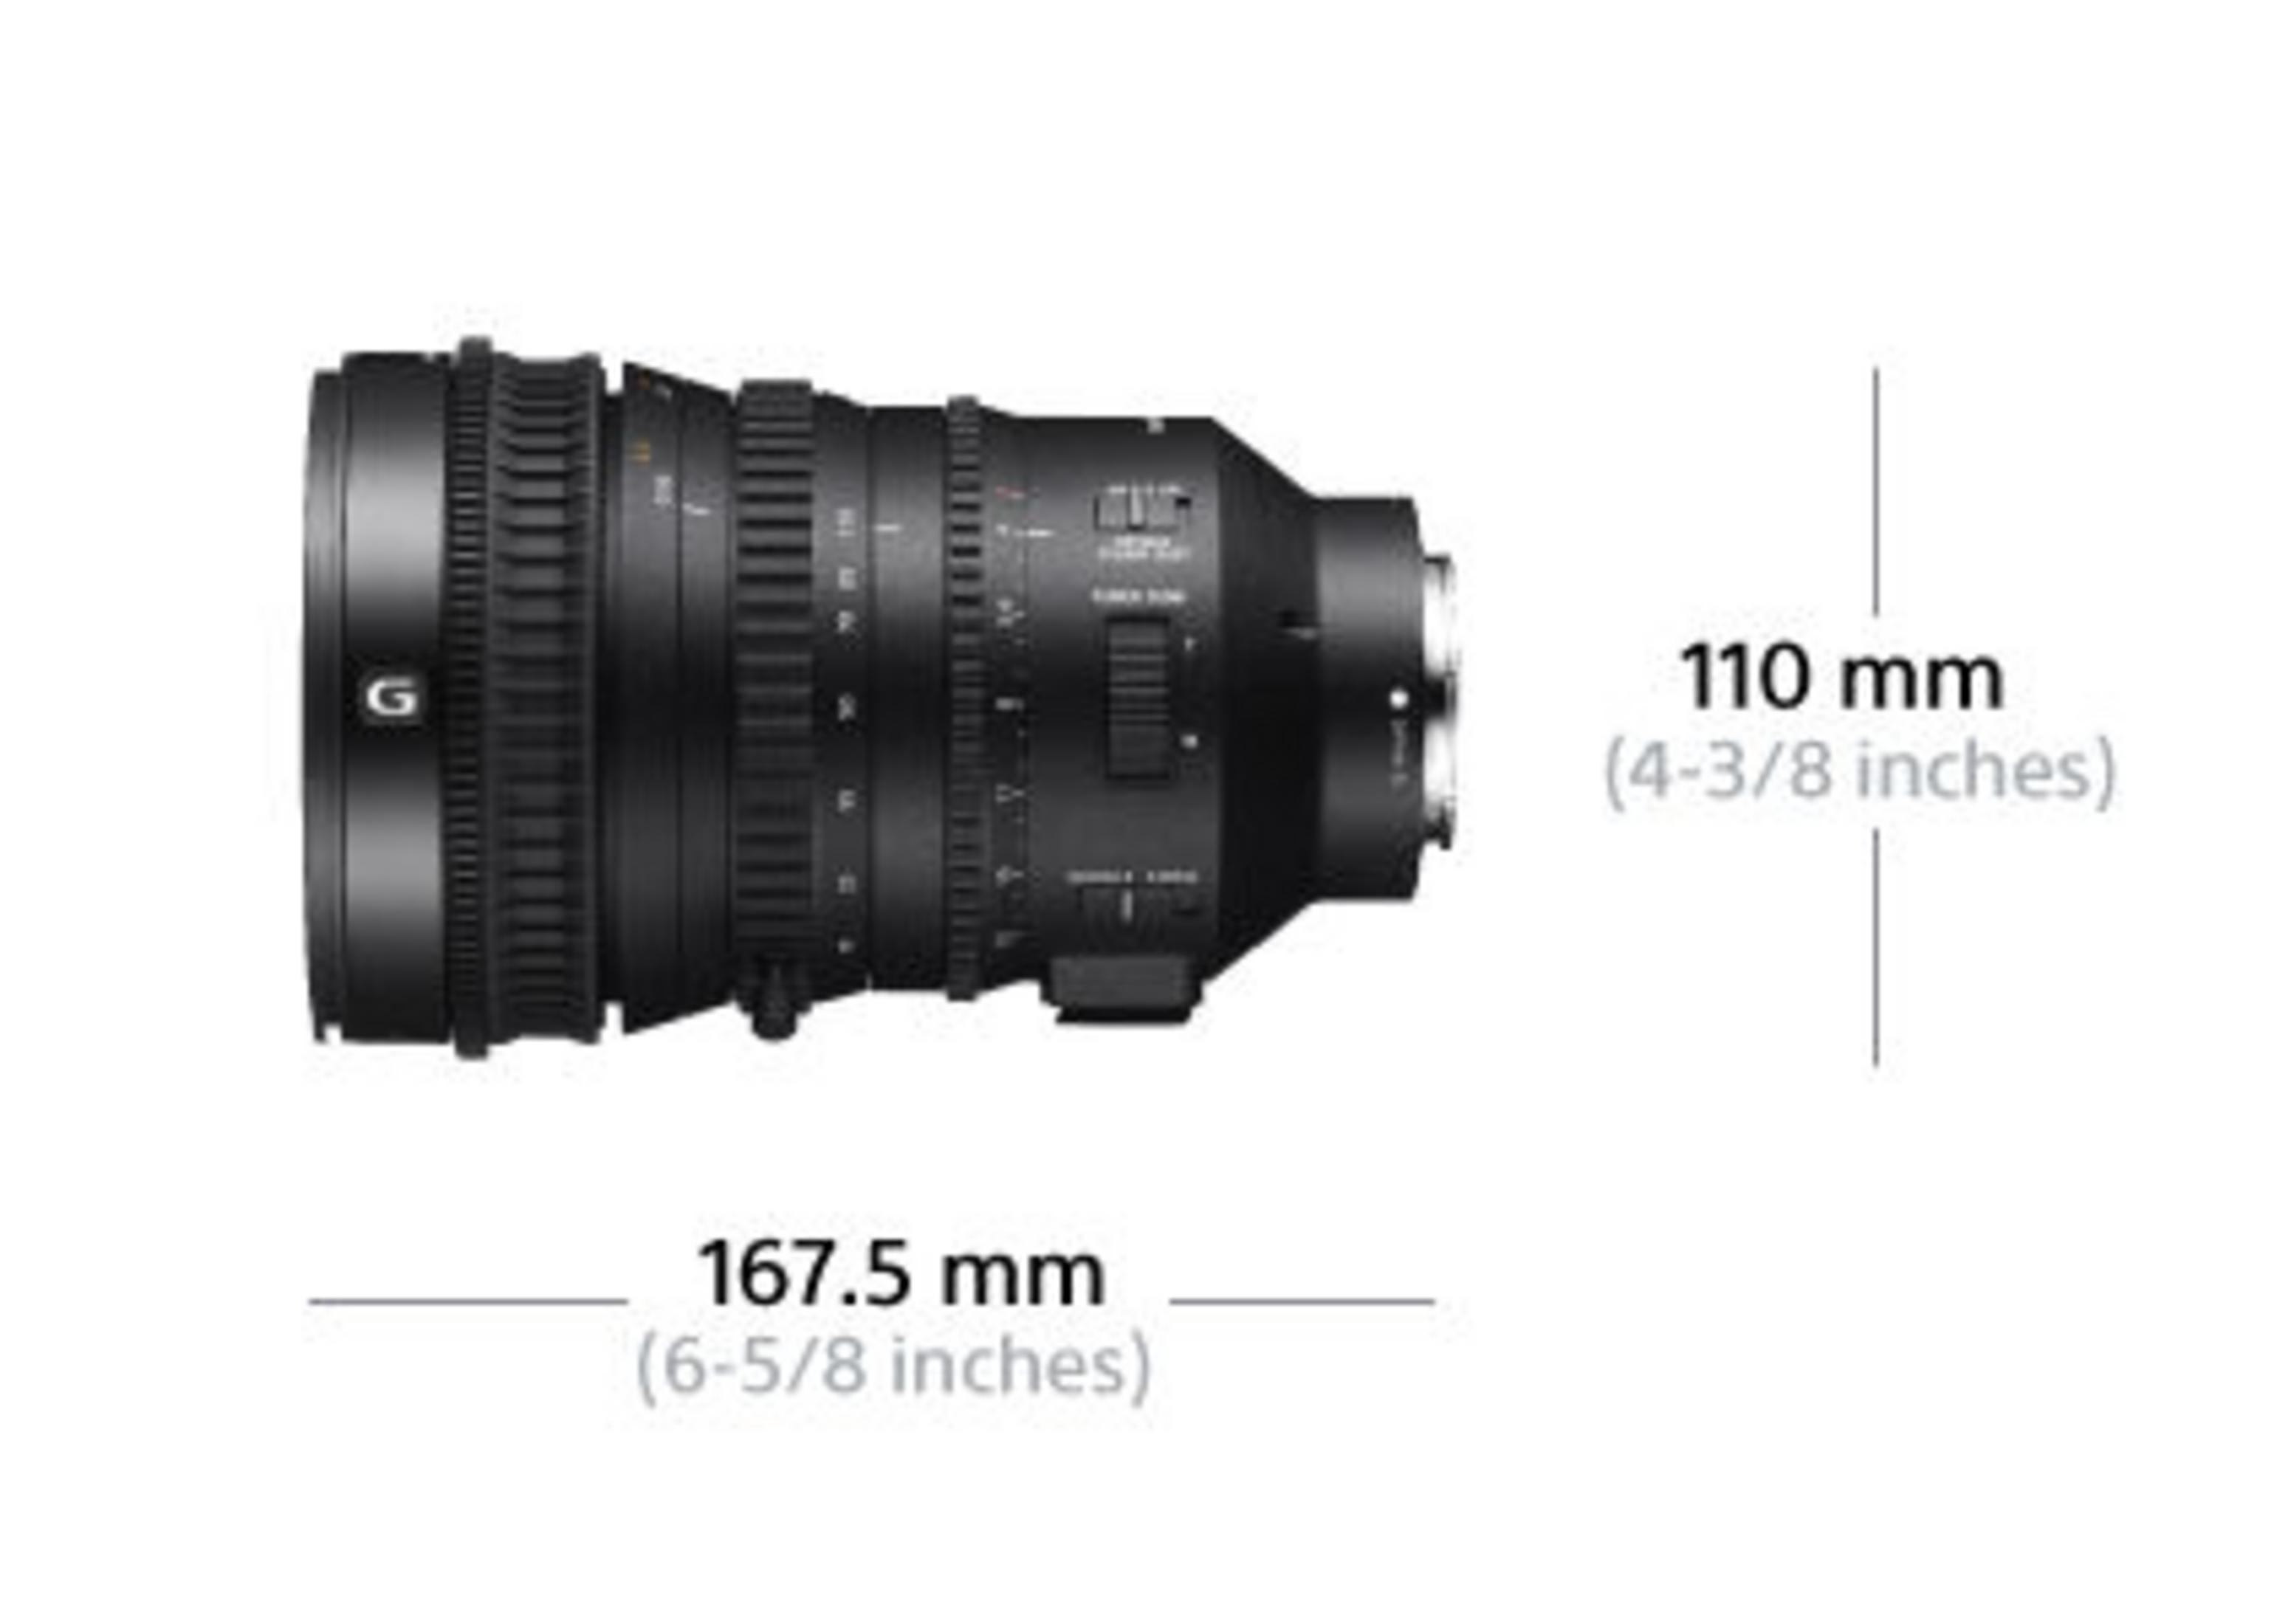 SONY SEL-P 18110 E-Mount, Schwarz) 18 mm - FE Sony f/4.0 POWERZOOM (F4) G 18-110MM DMR G-OBJEKTI 110 Blende, OSS, mm G-Lens, für (Objektiv Circulare